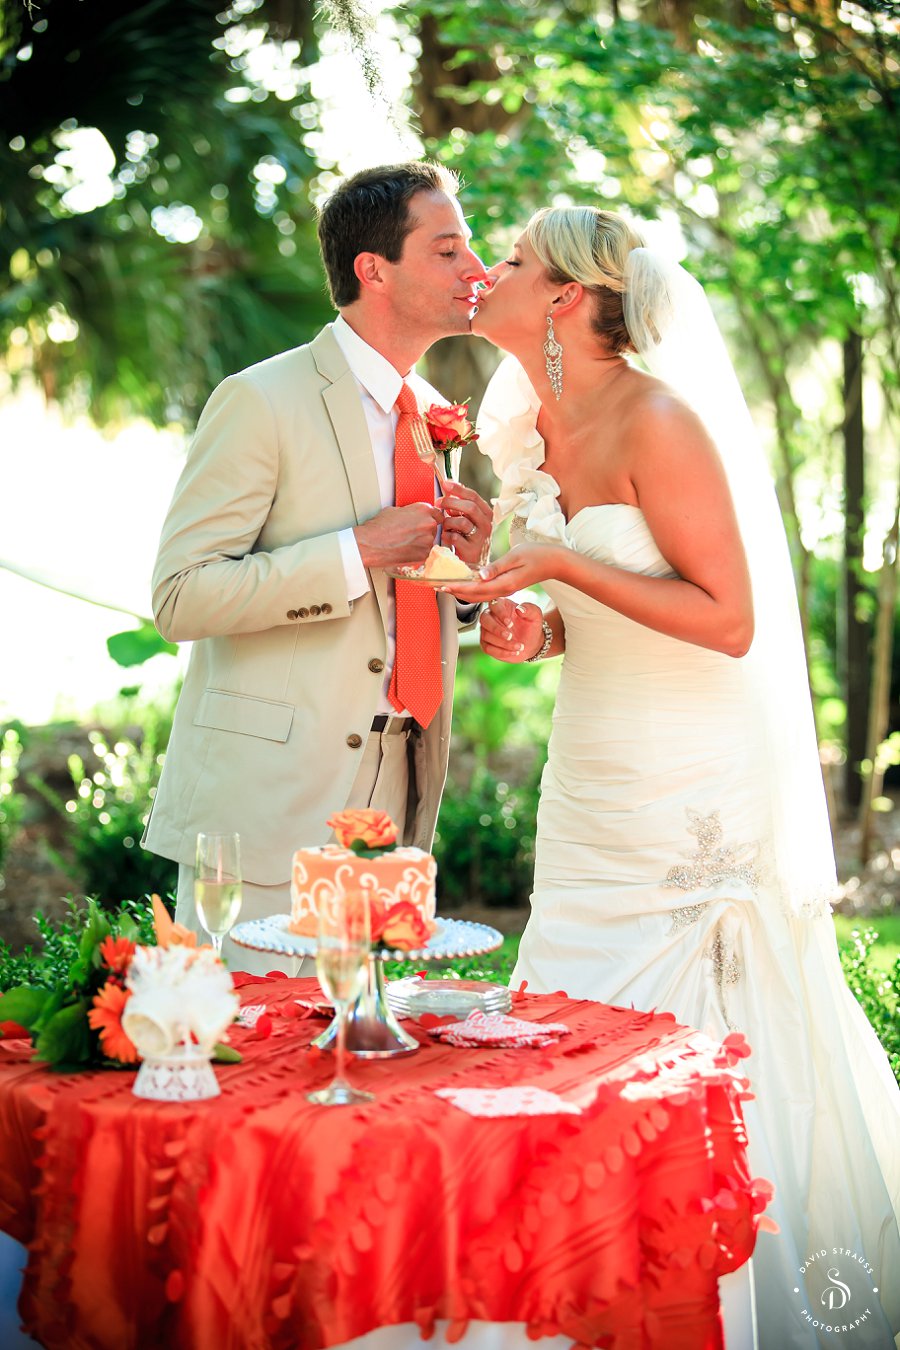 Charleston Wedding Photography - River Oaks Venue - Photographer David Strauss - 22